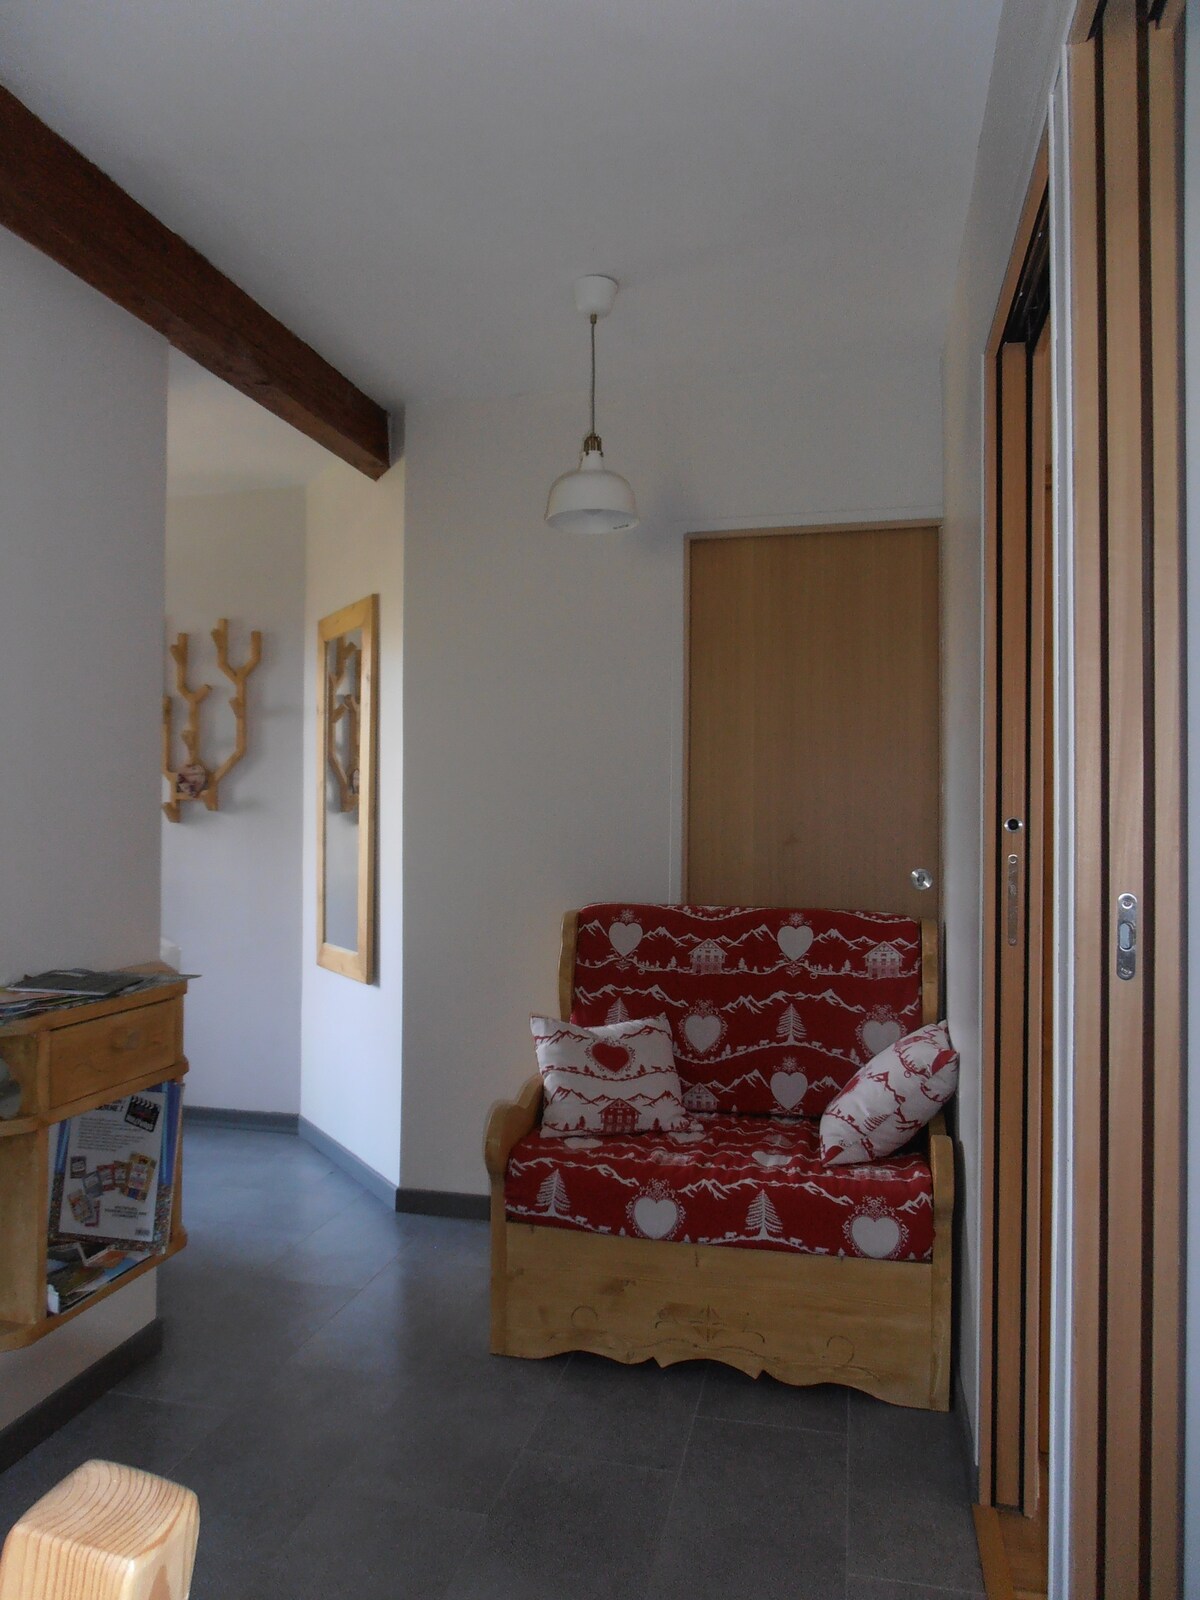 Vosges公寓很小